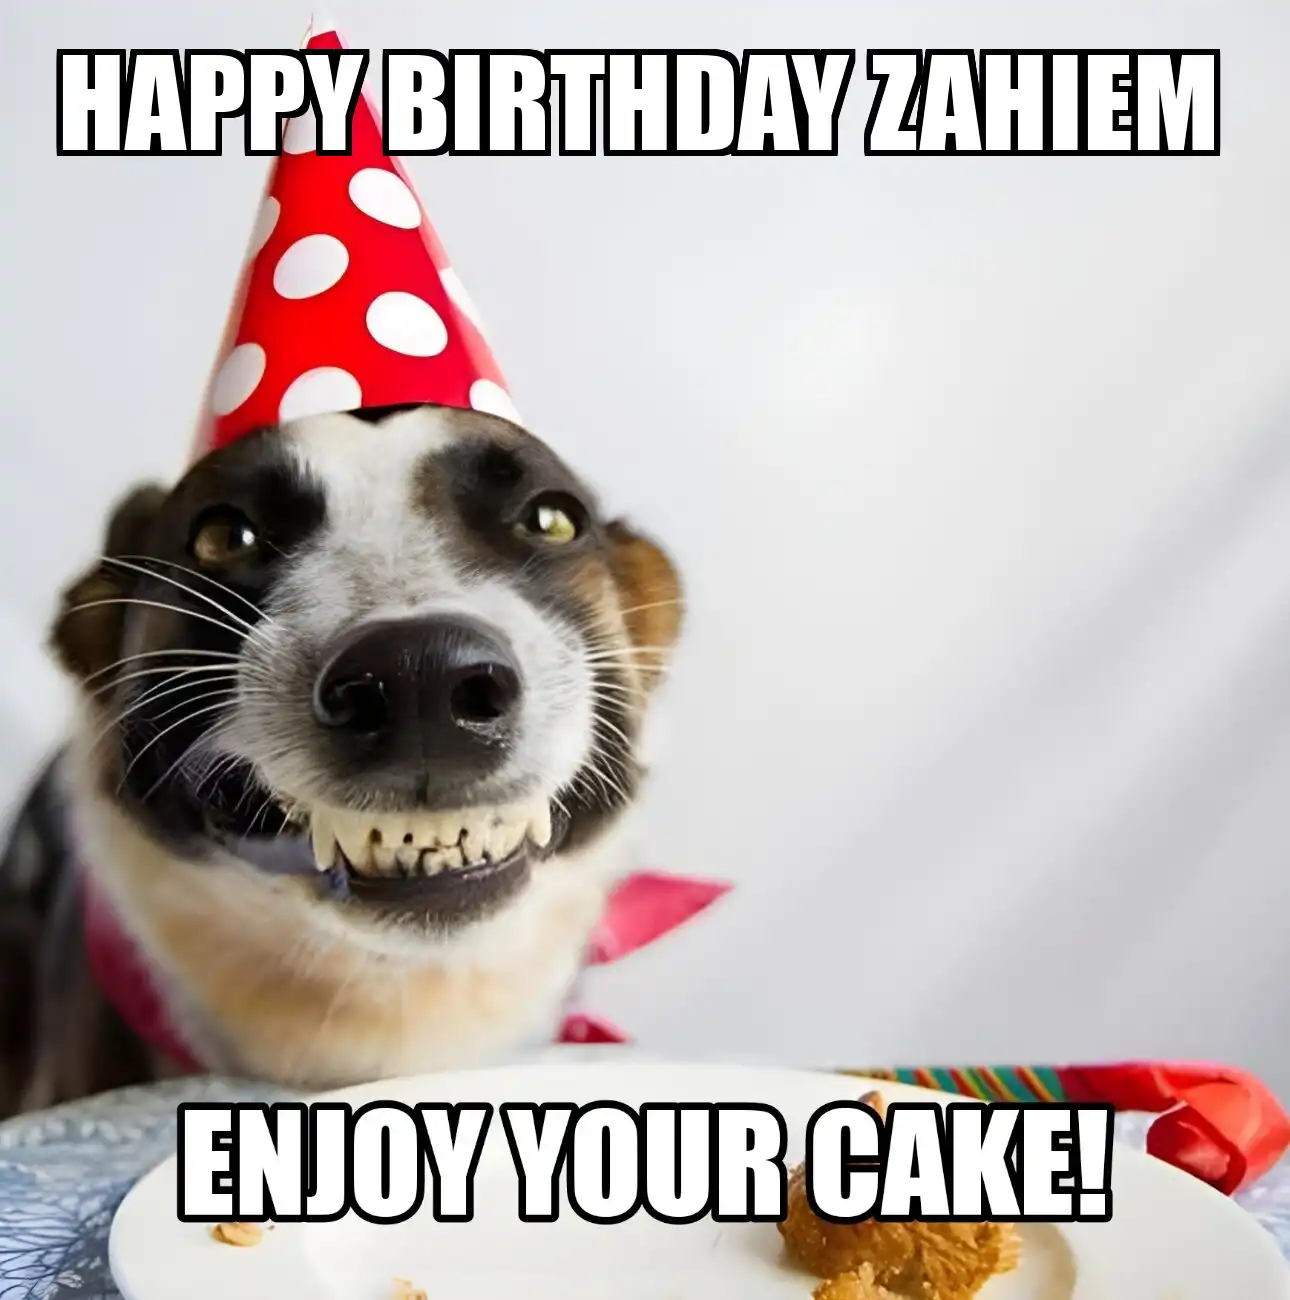 Happy Birthday Zahiem Enjoy Your Cake Dog Meme